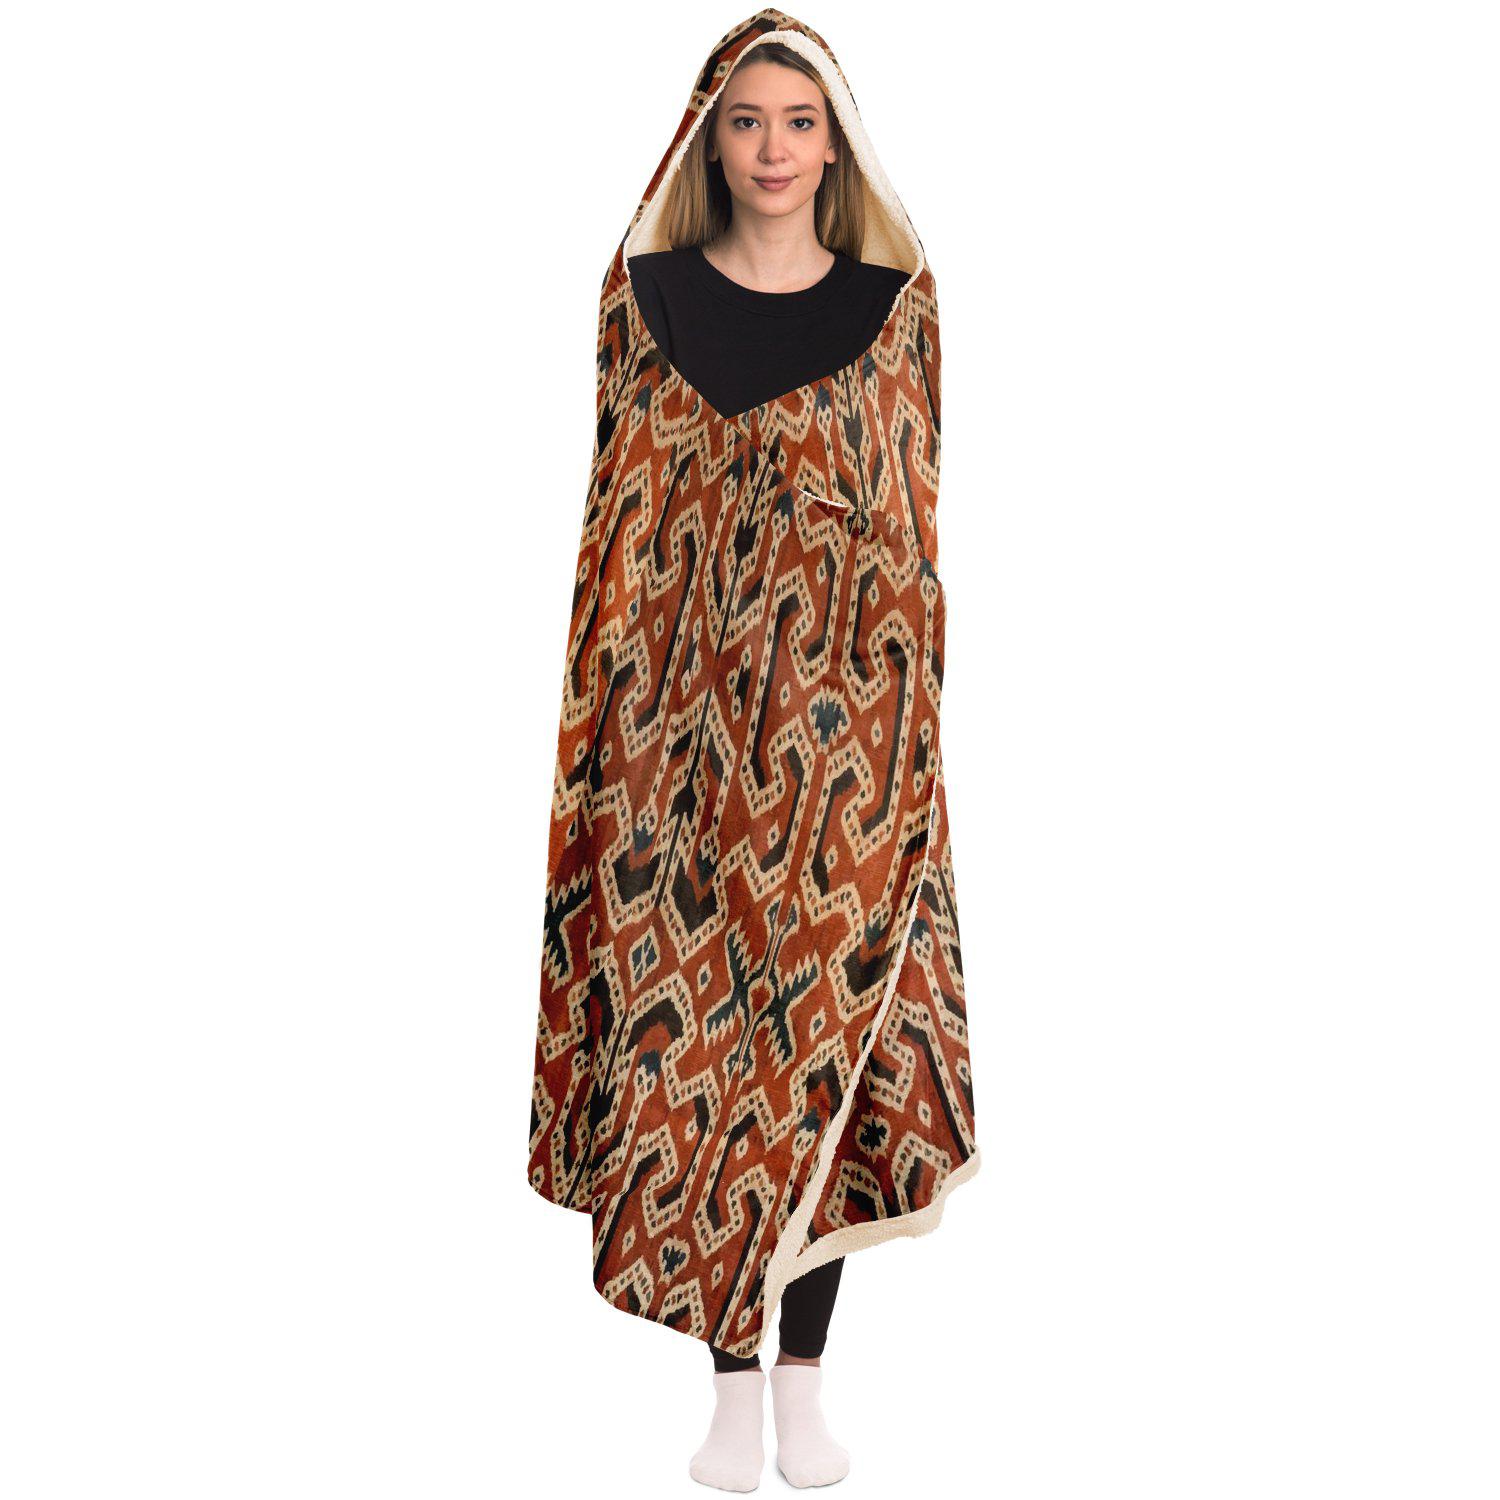 Hooded Blanket - AOP Hooded Blanket, Indonesian Ikat Design